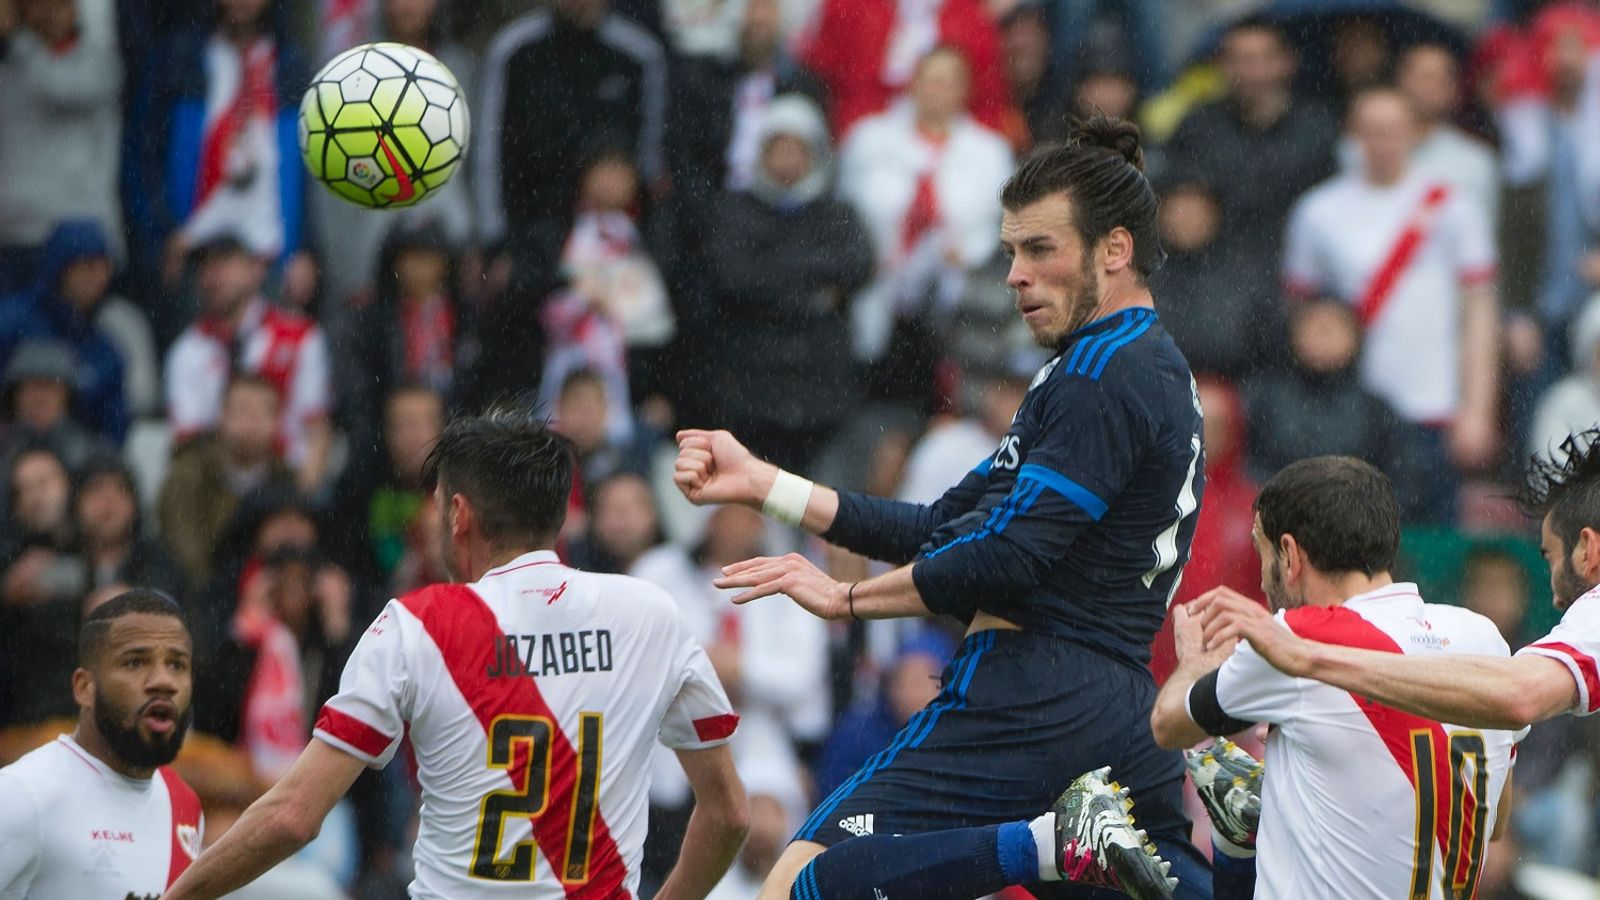 Rayo Vallecano 2-3 Real Madrid: Gareth Bale brace turns game